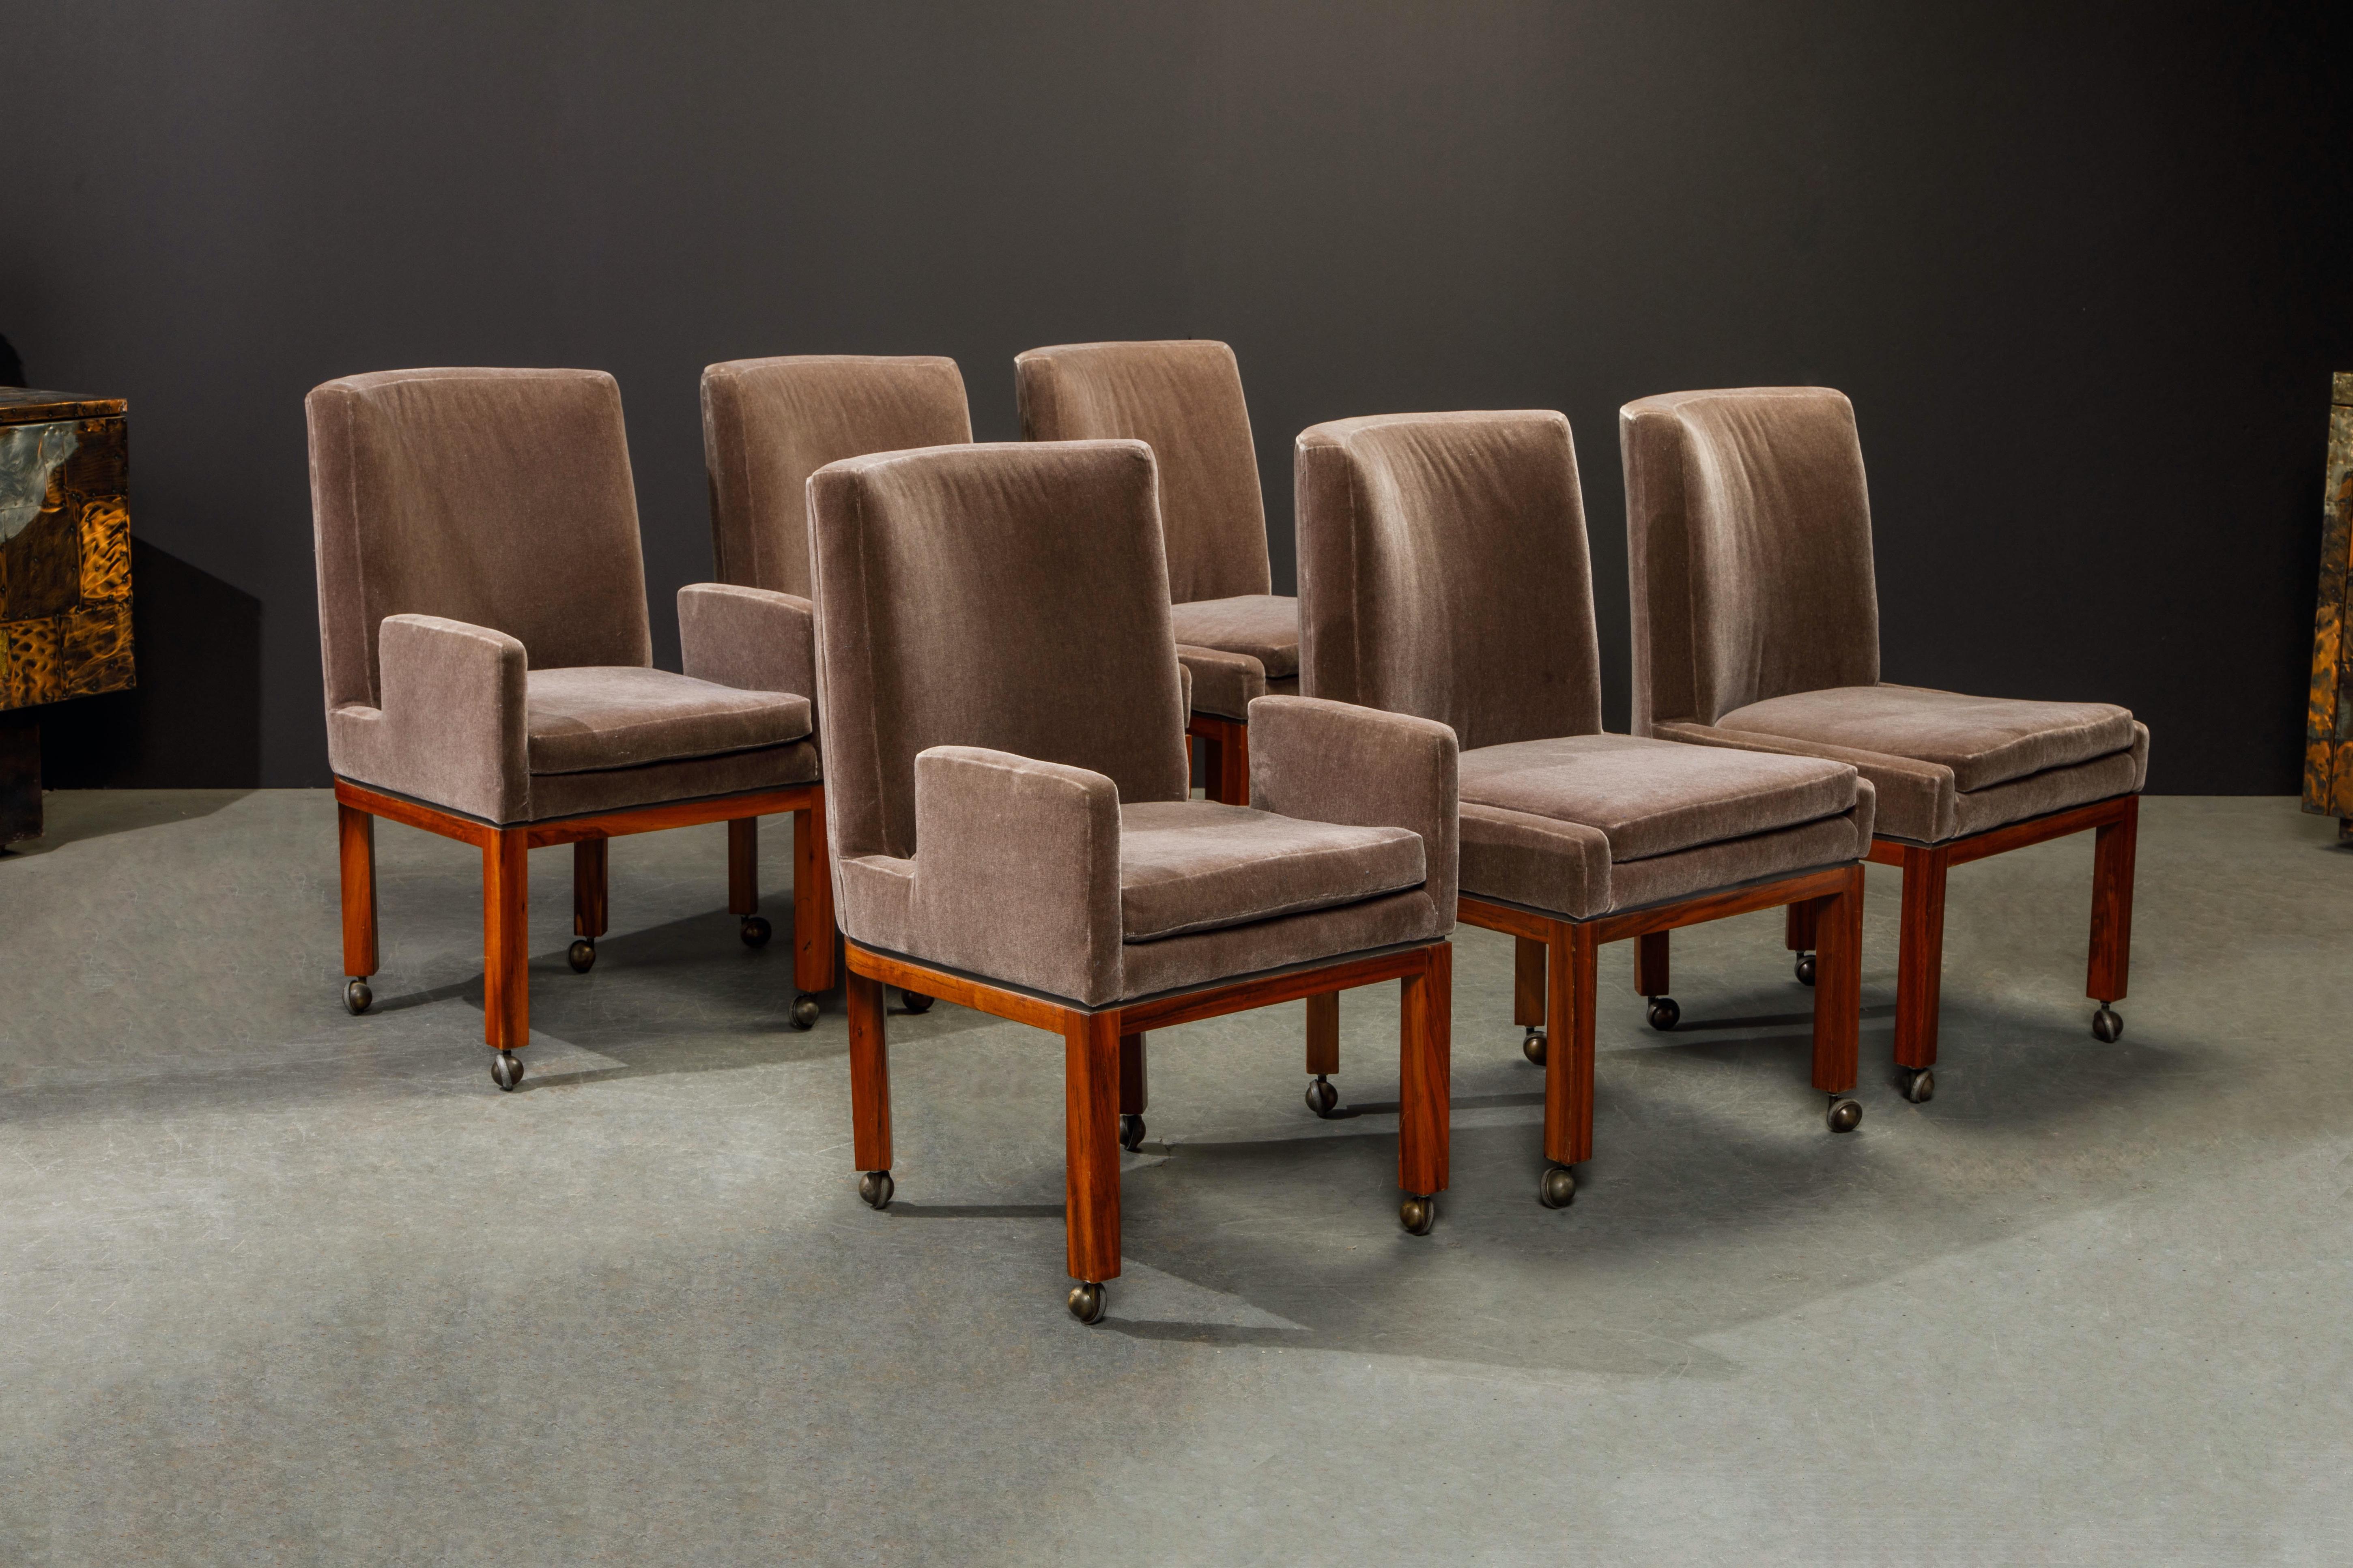 Post-Modern Vladimir Kagan Handmade Dining Chairs on Casters, Set of Six, c 1970s, Signed